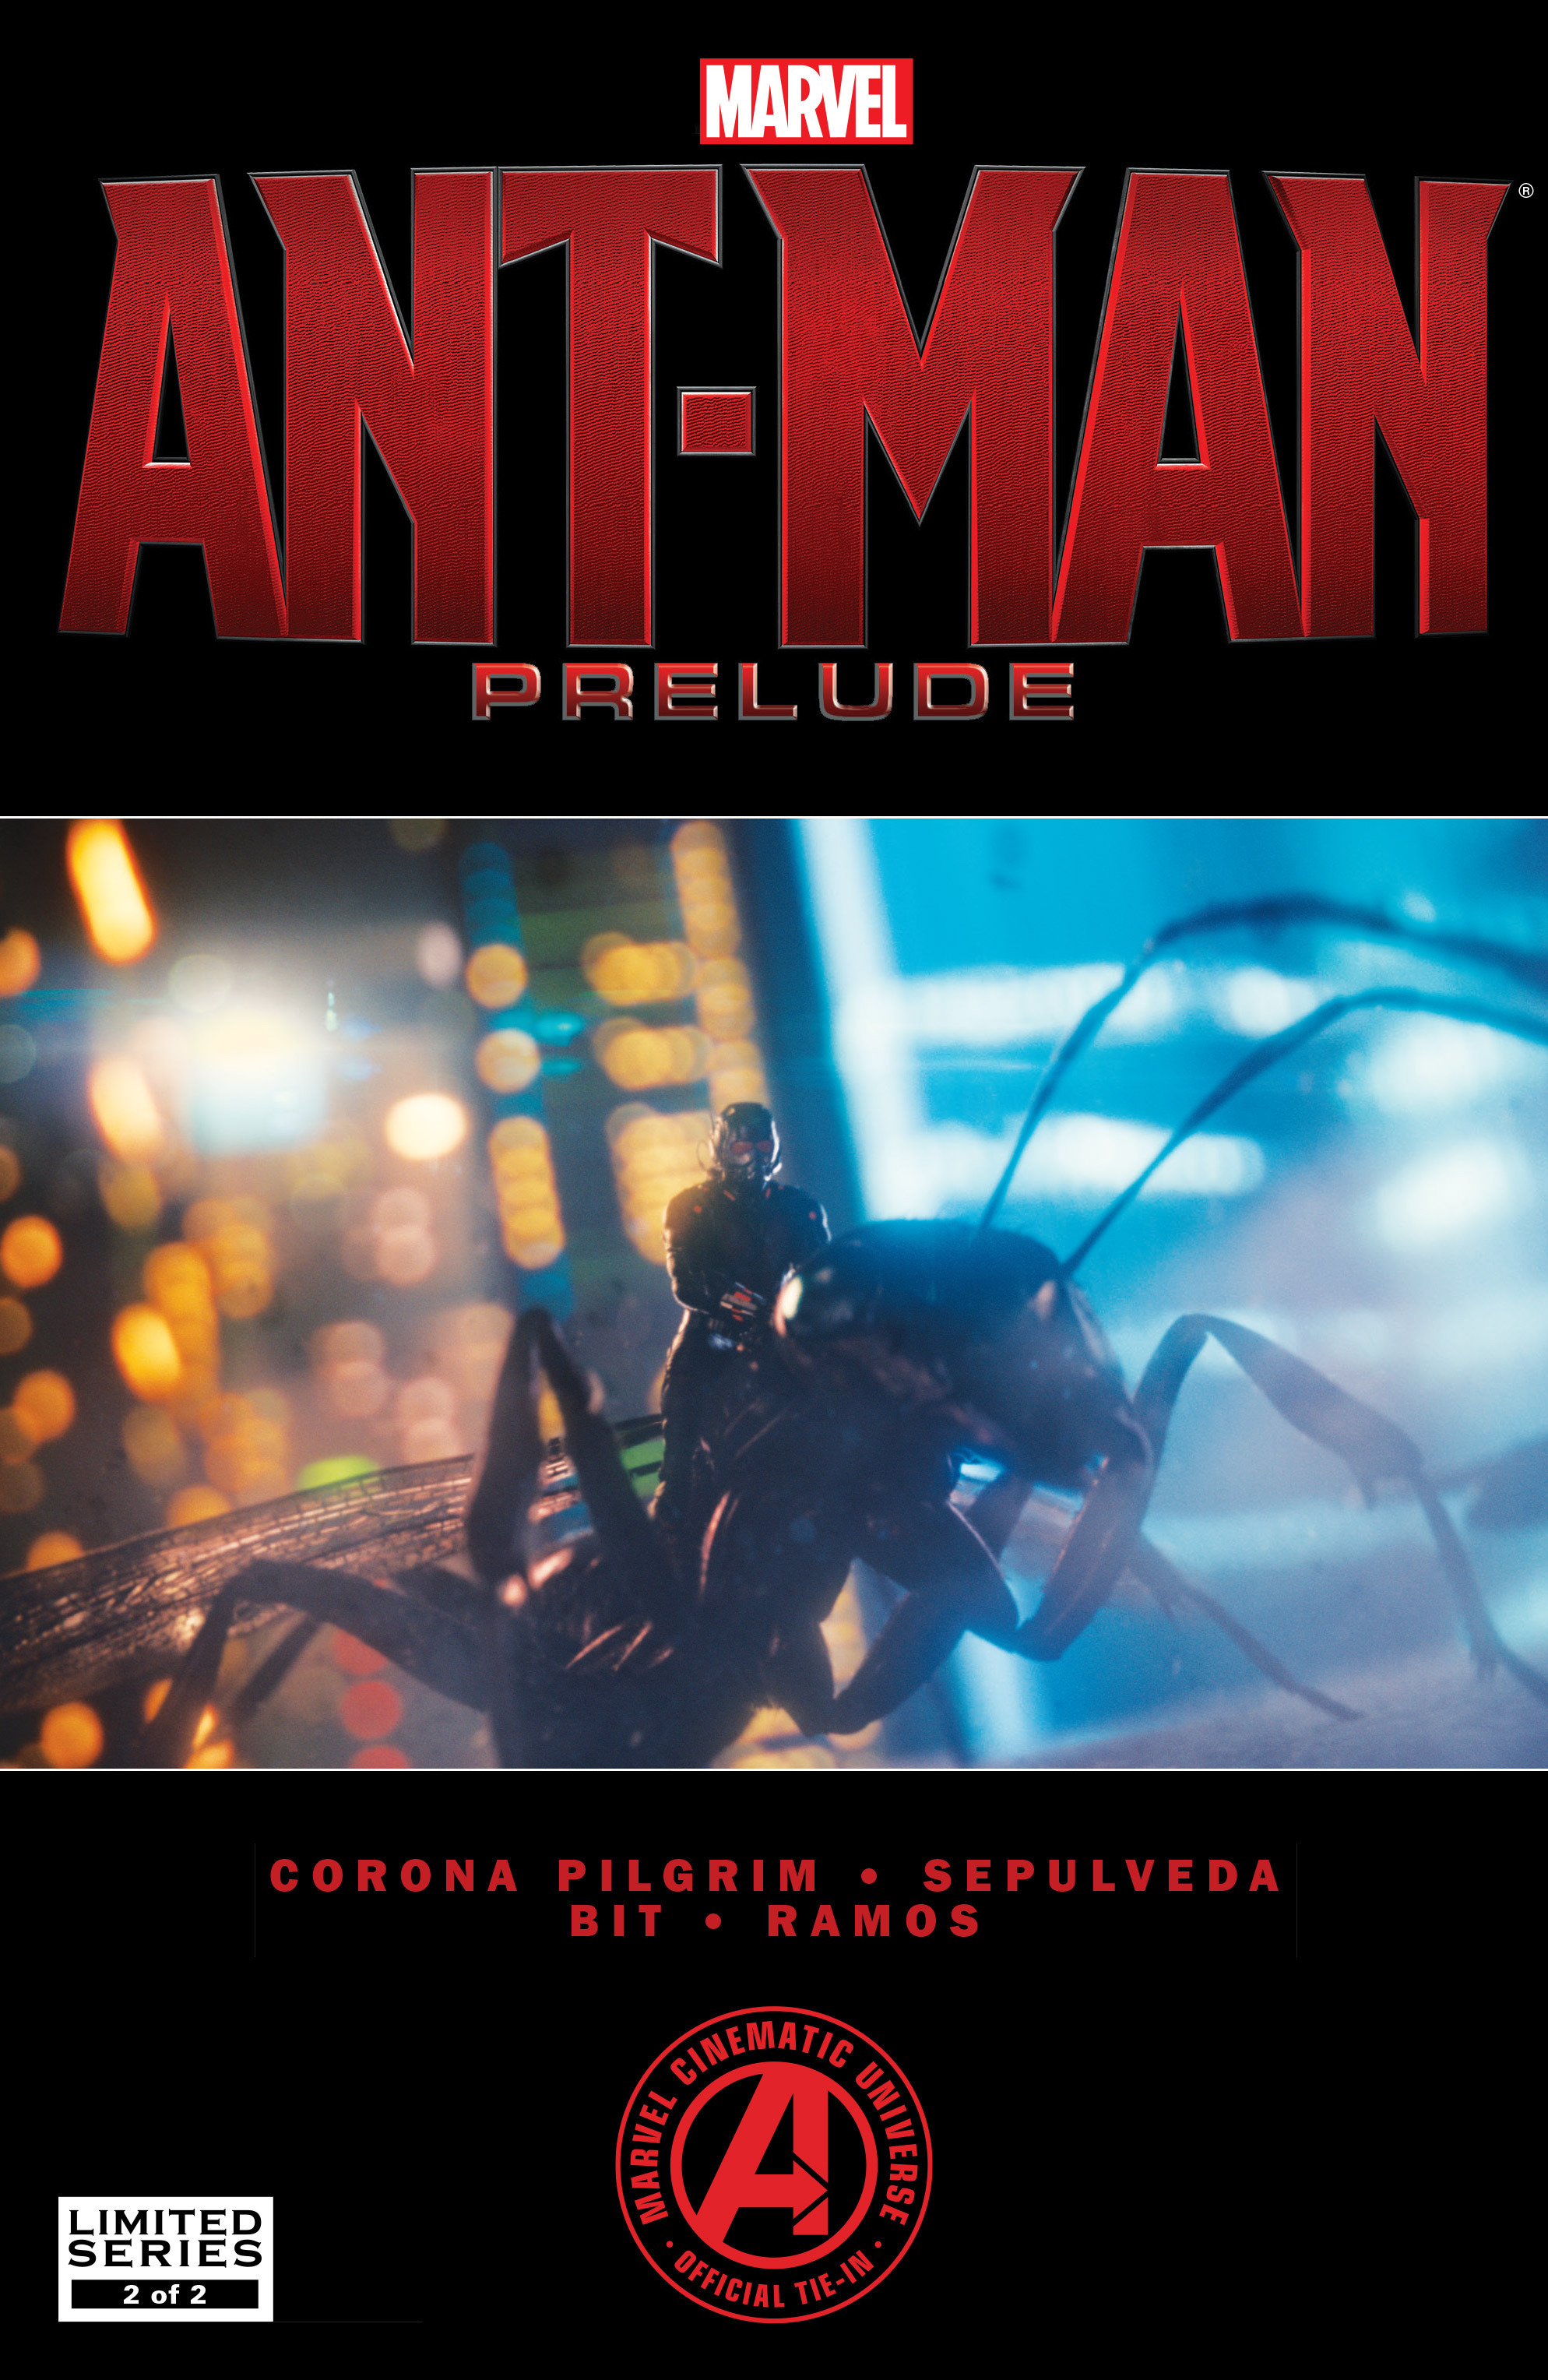 Marvel's Ant-Man Prelude Vol. 1 #2